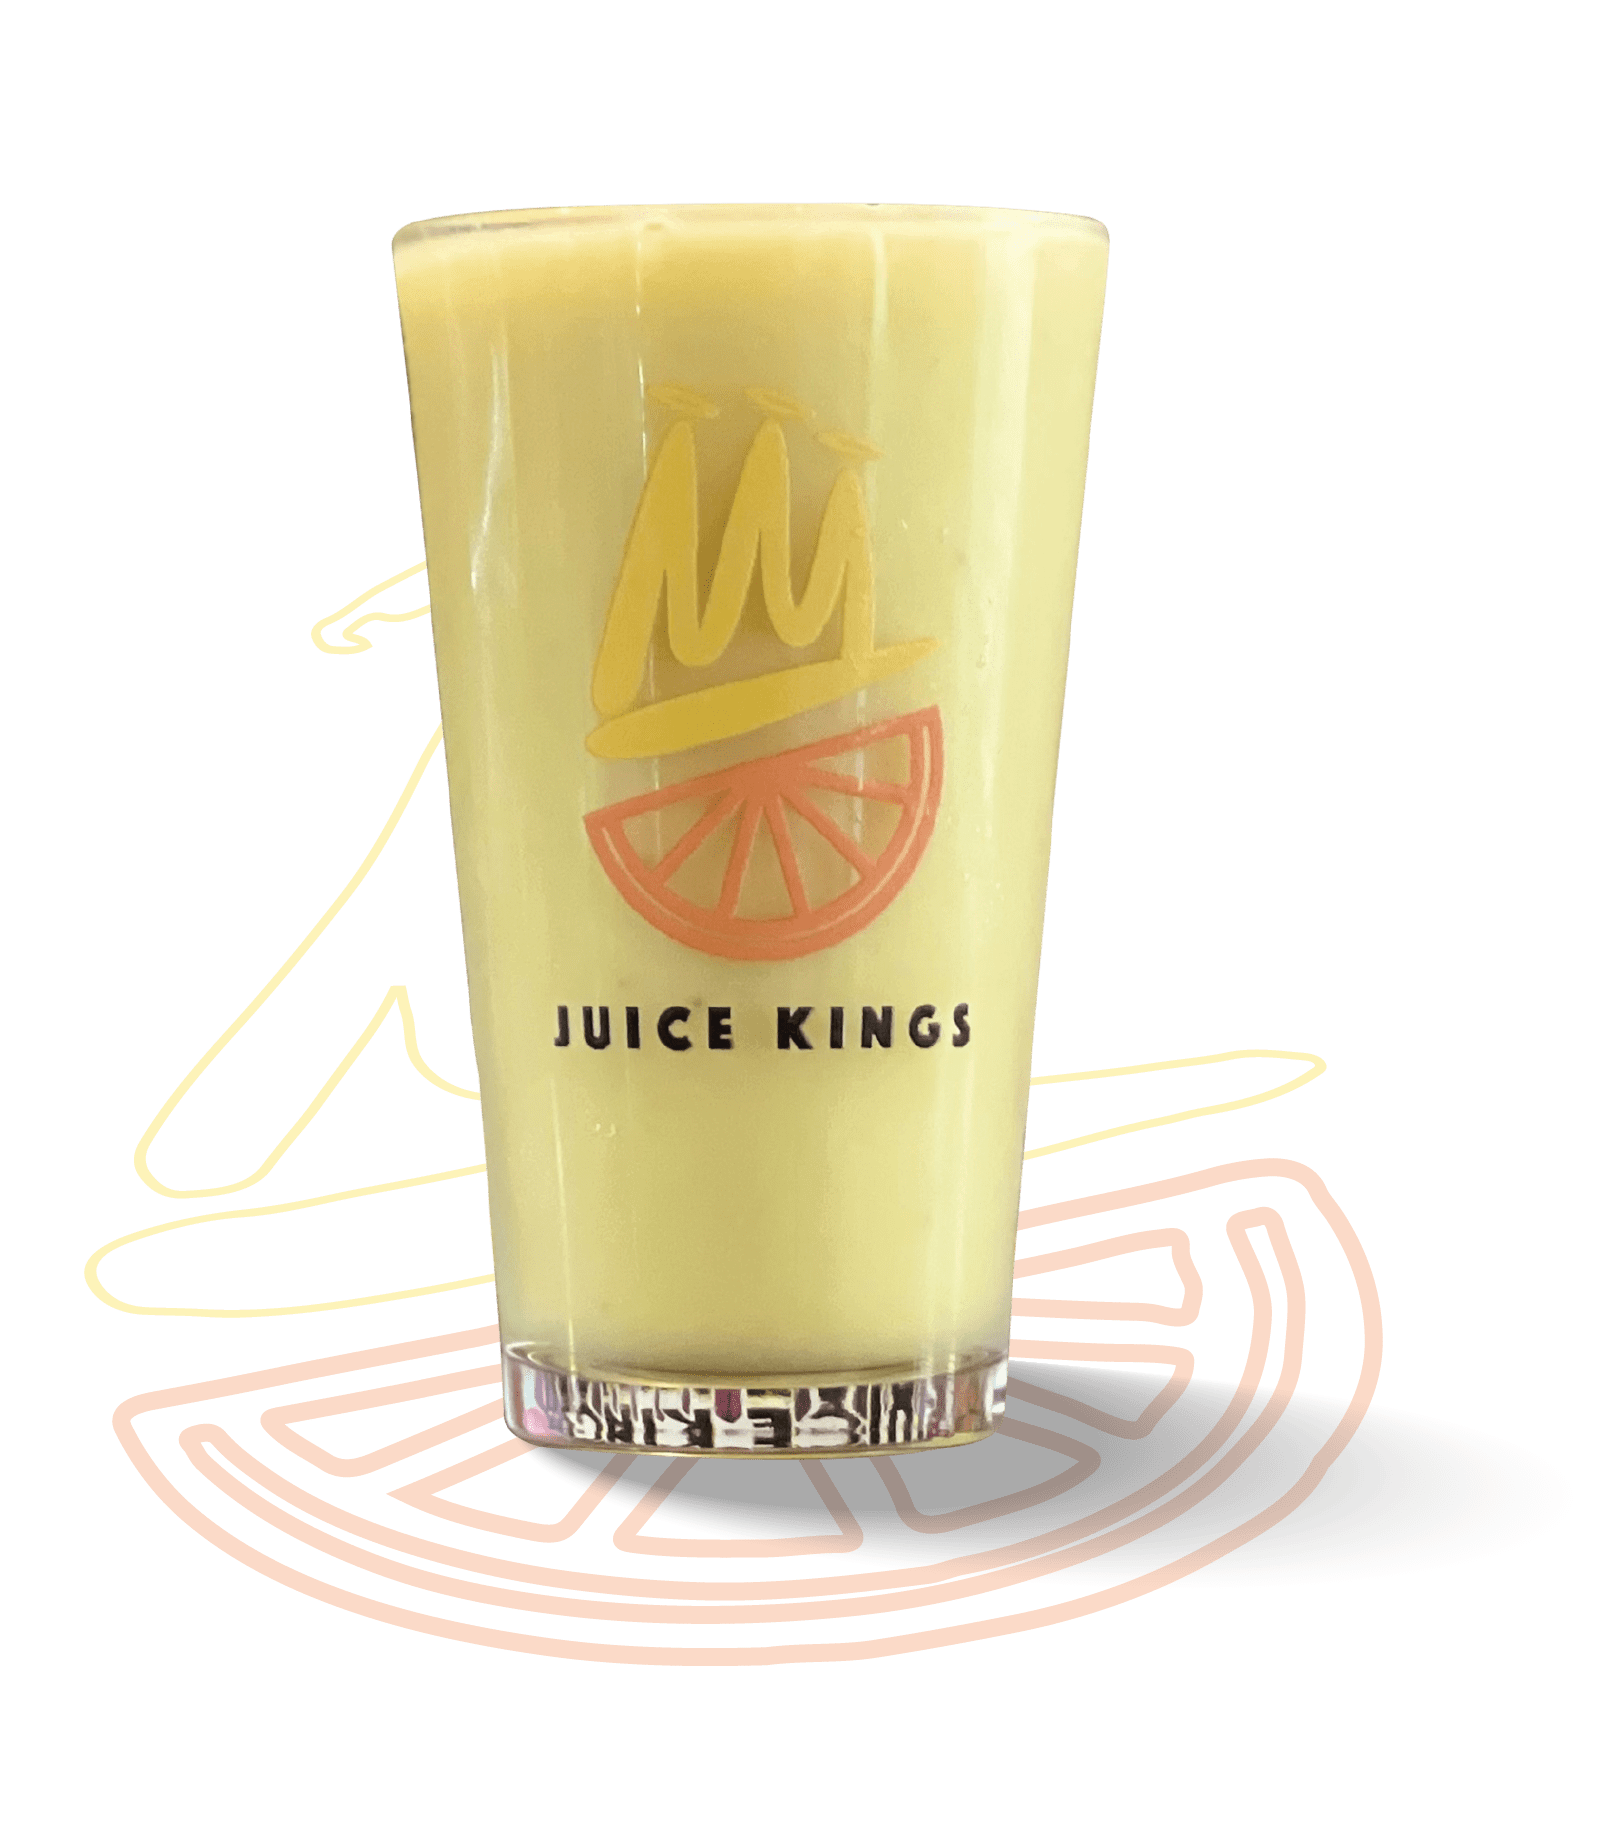 Juice Kings pineapple mylk